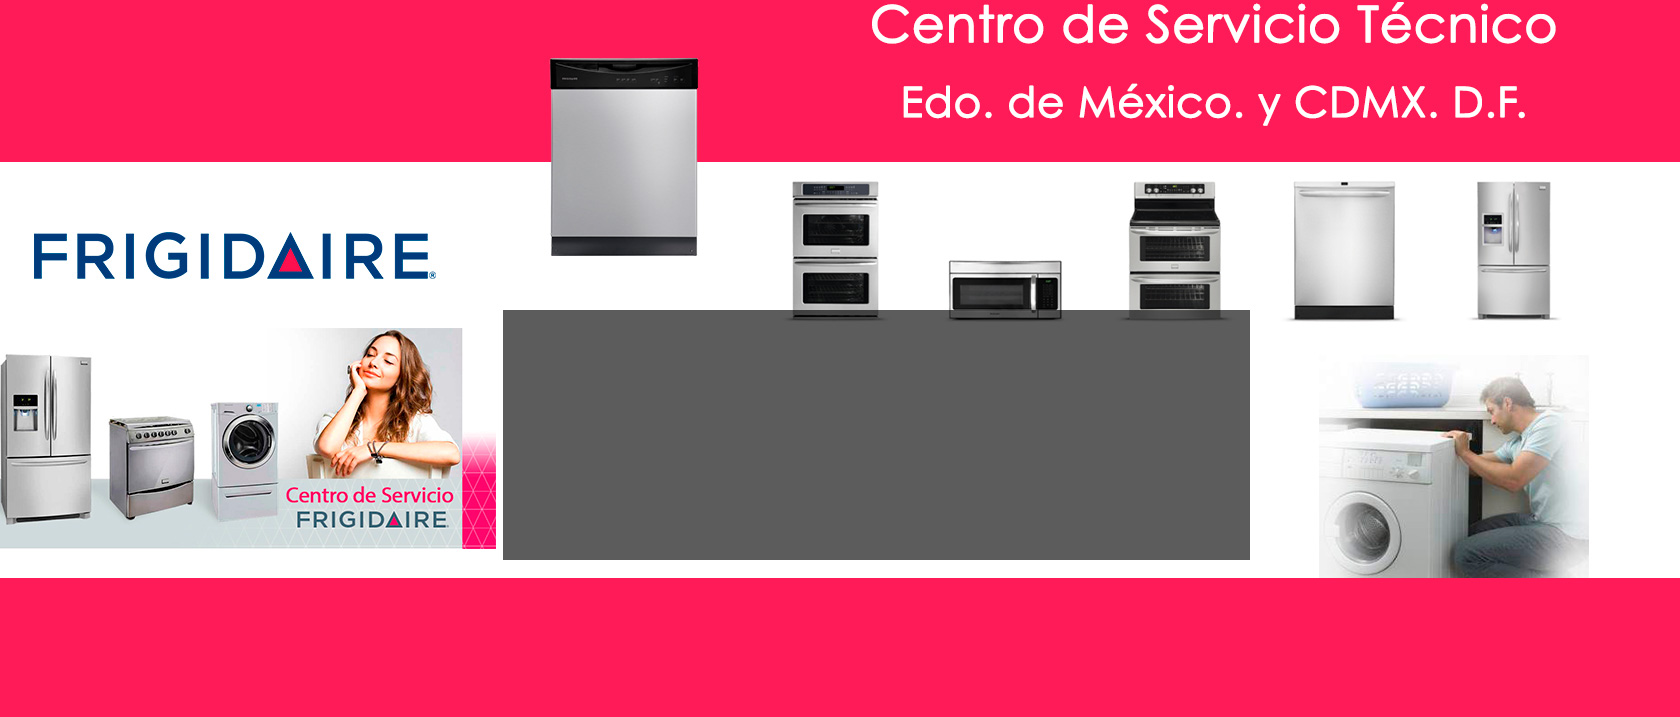 Reparacion de Refrigeradores Frigidaire Estado de Mexico